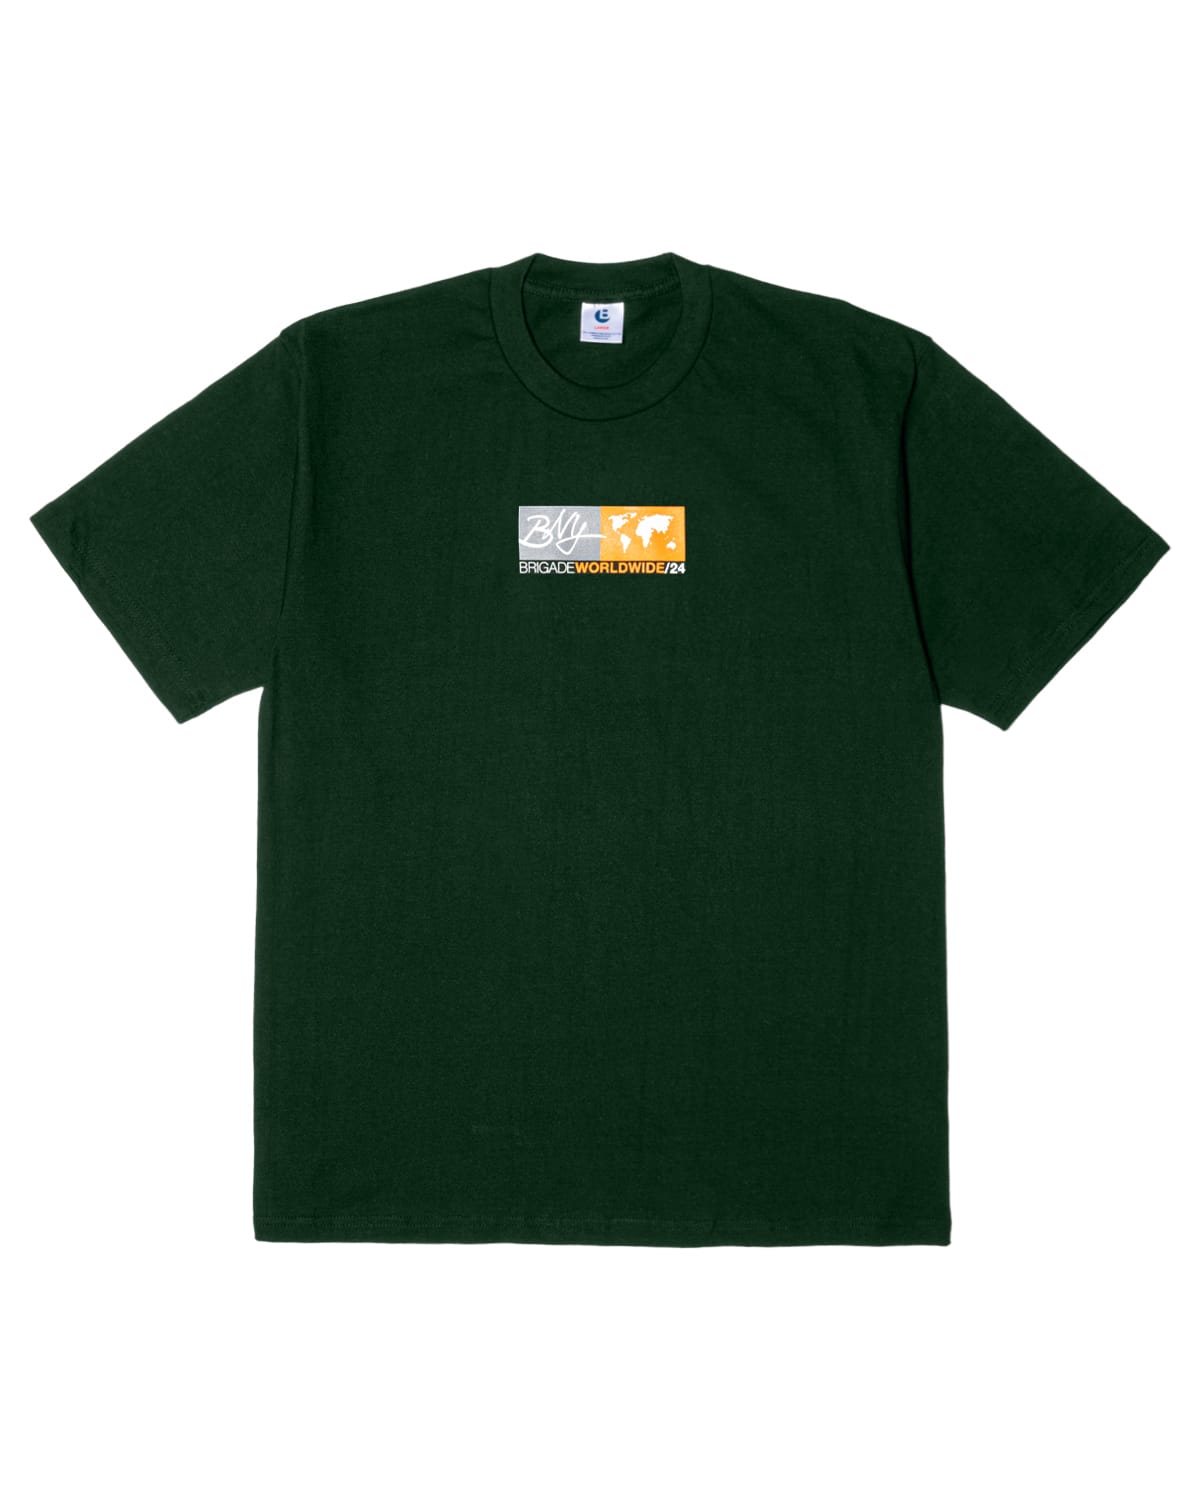 BNY Worldwide T-Shirt